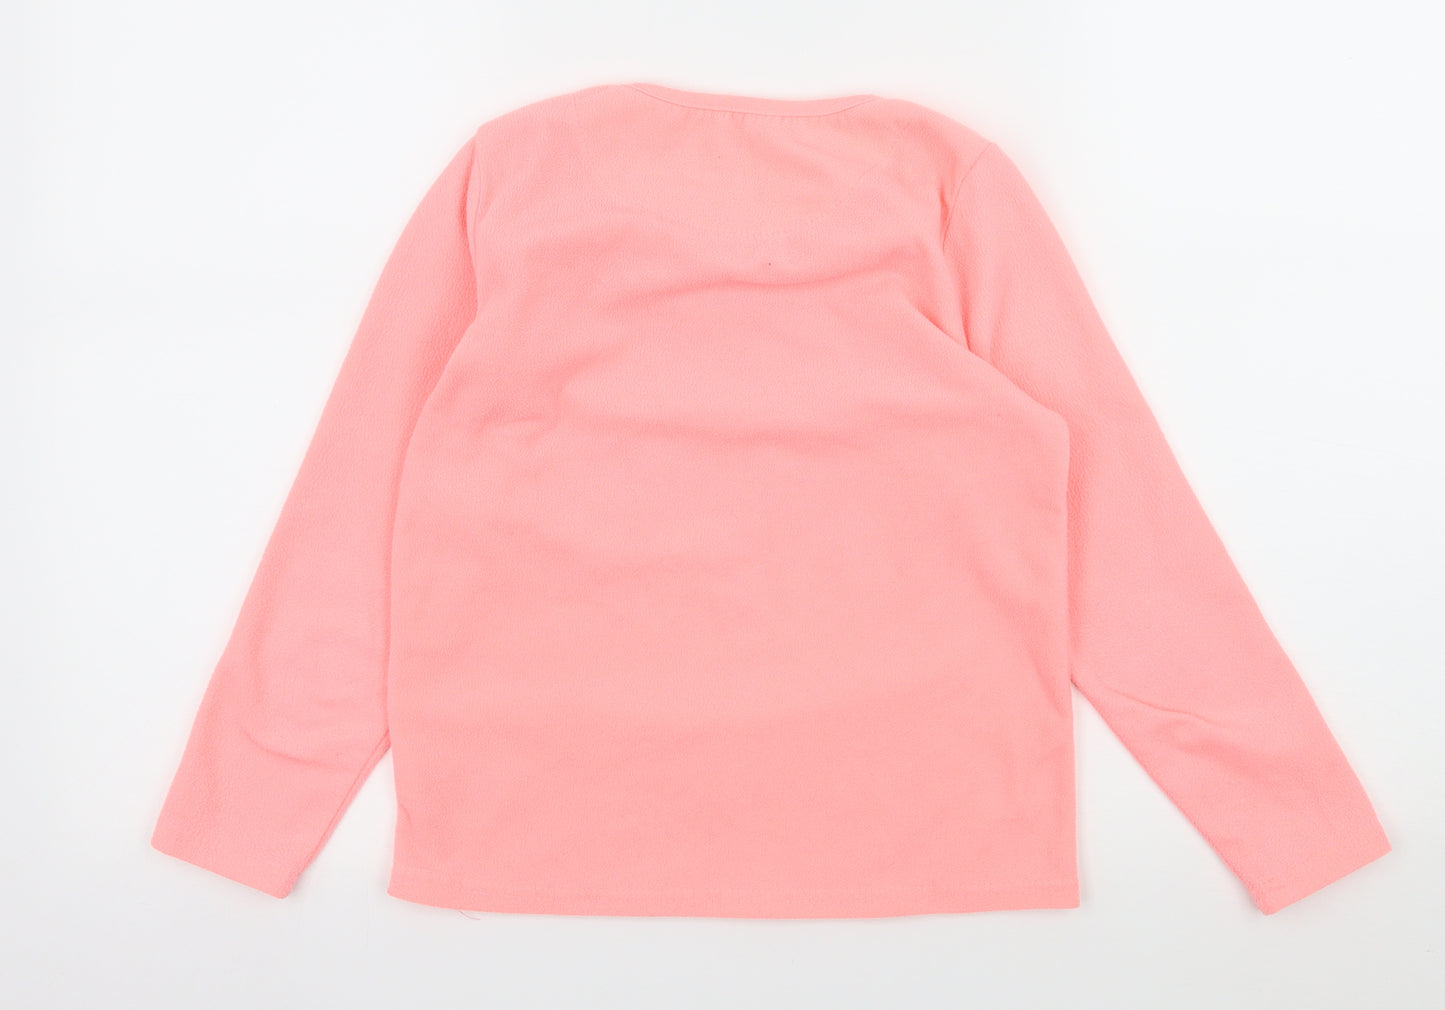 Primark Girls Pink Geometric Fleece Top Pyjama Top Size 9-10 Years  - Girl Power